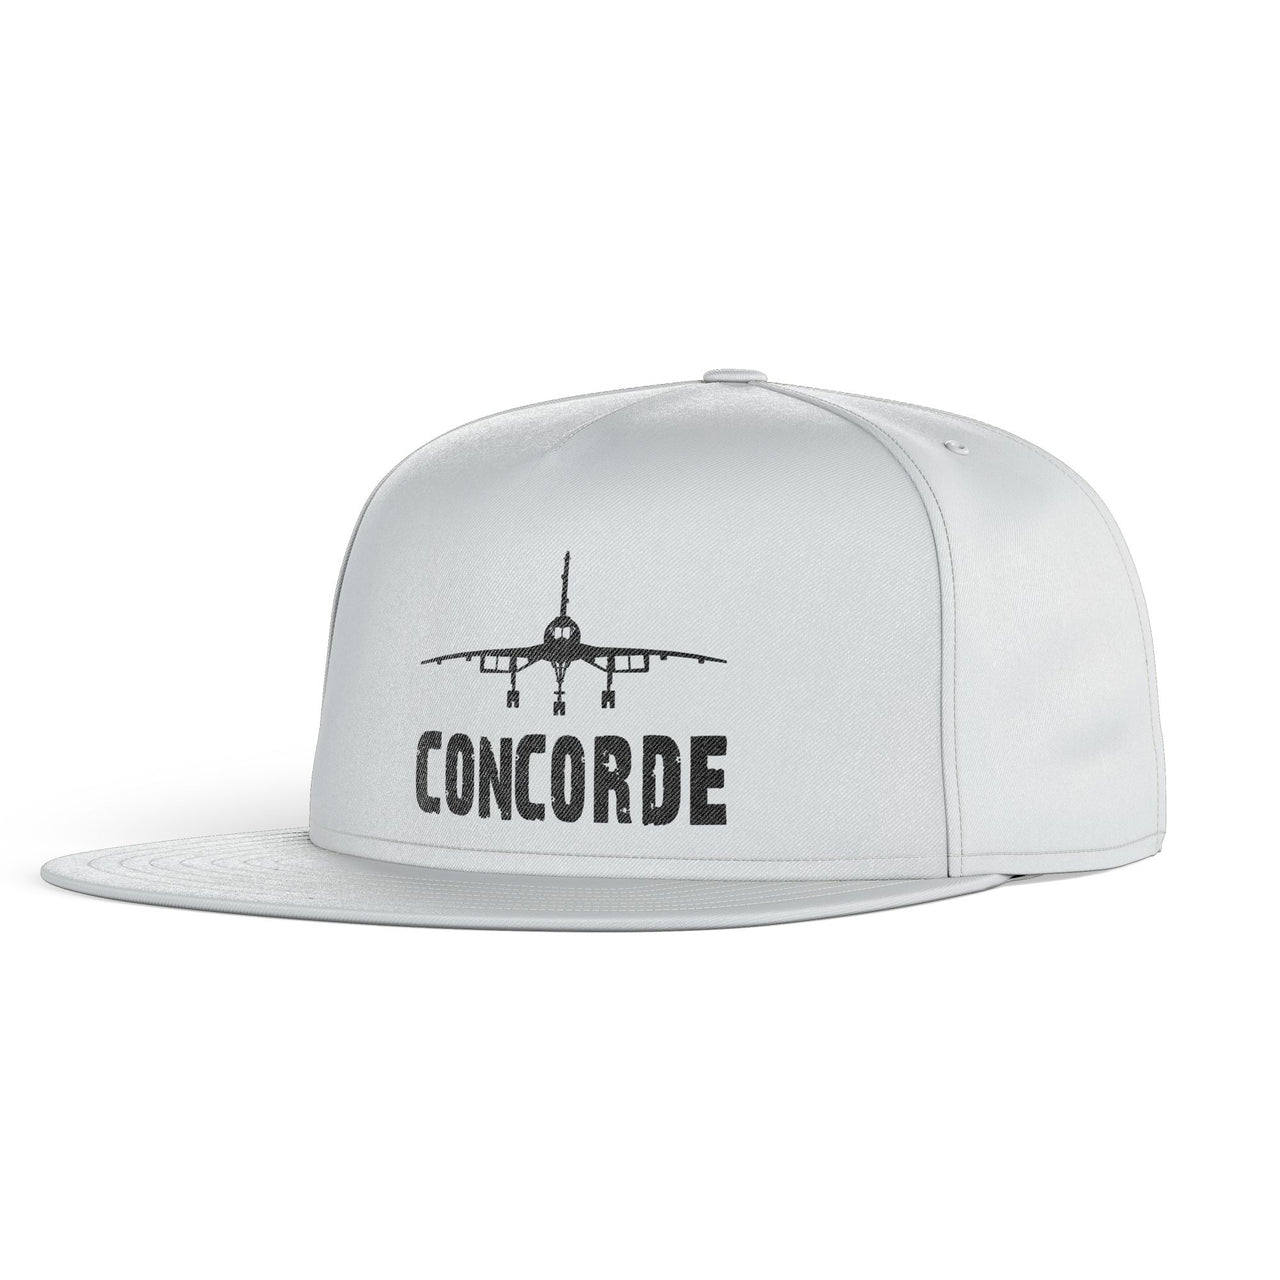 Concorde & Plane Designed Snapback Caps & Hats